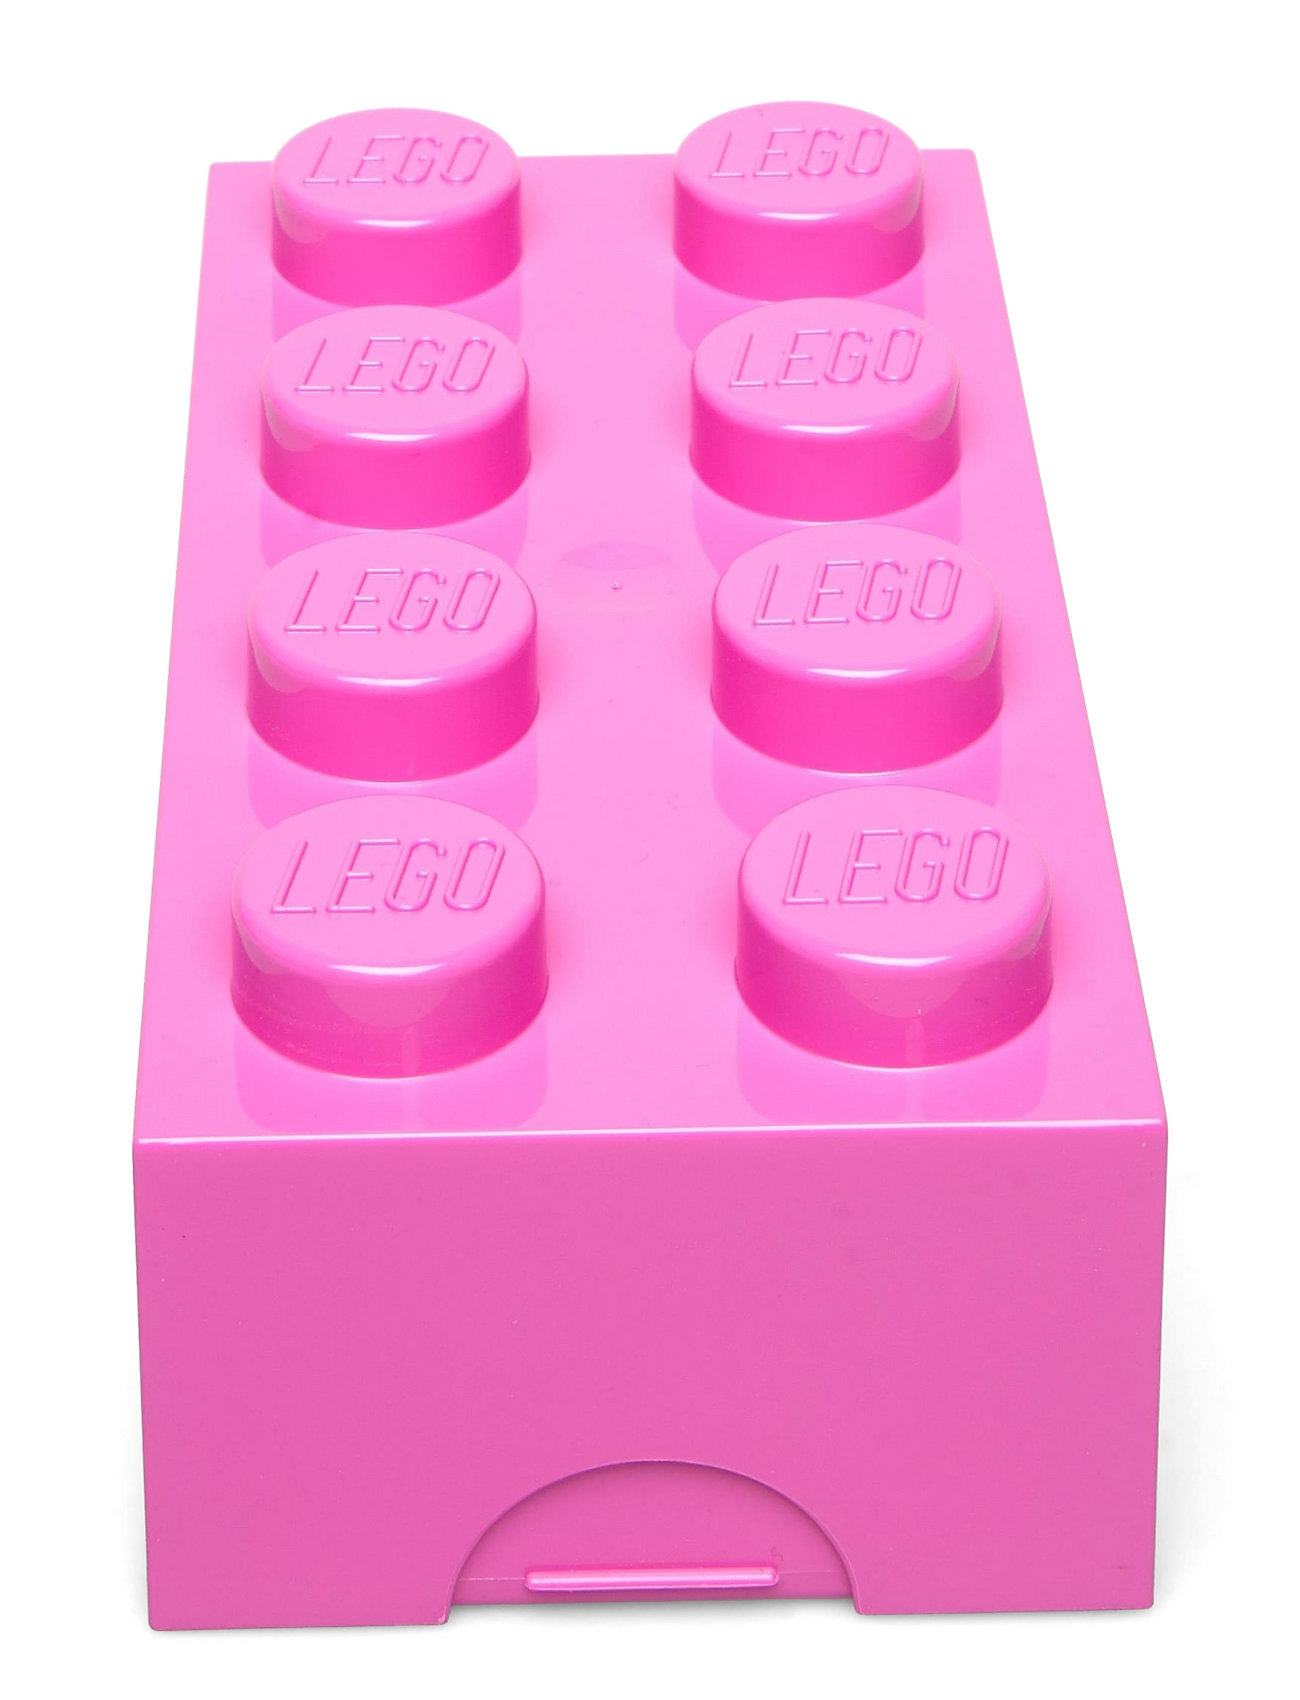 Lego Box Classic Home Kids Decor Storage Storage Boxes Pink LEGO STORAGE